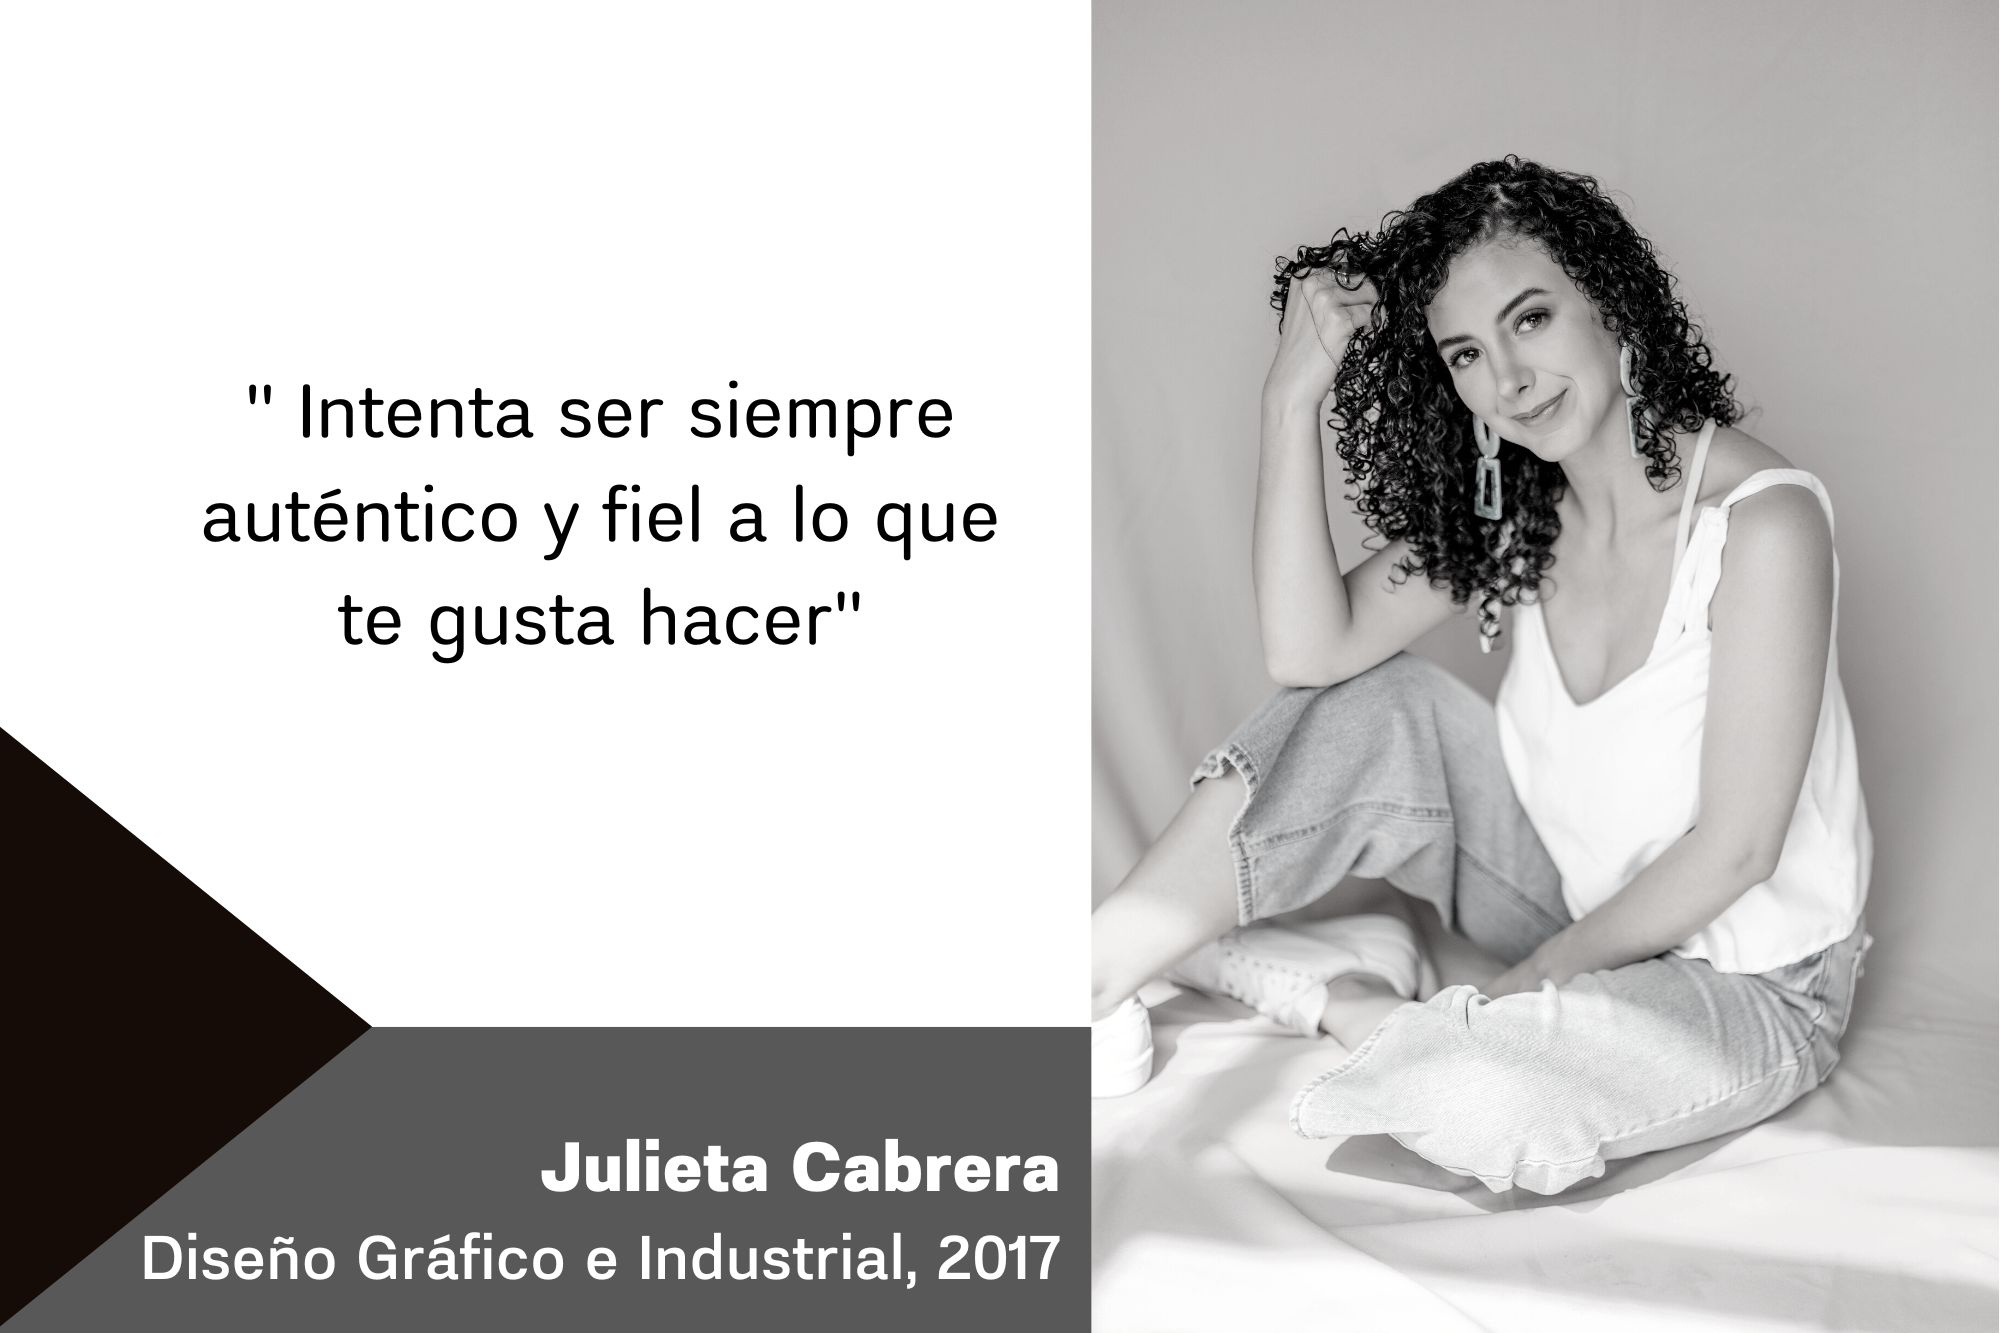 Julieta Cabrera